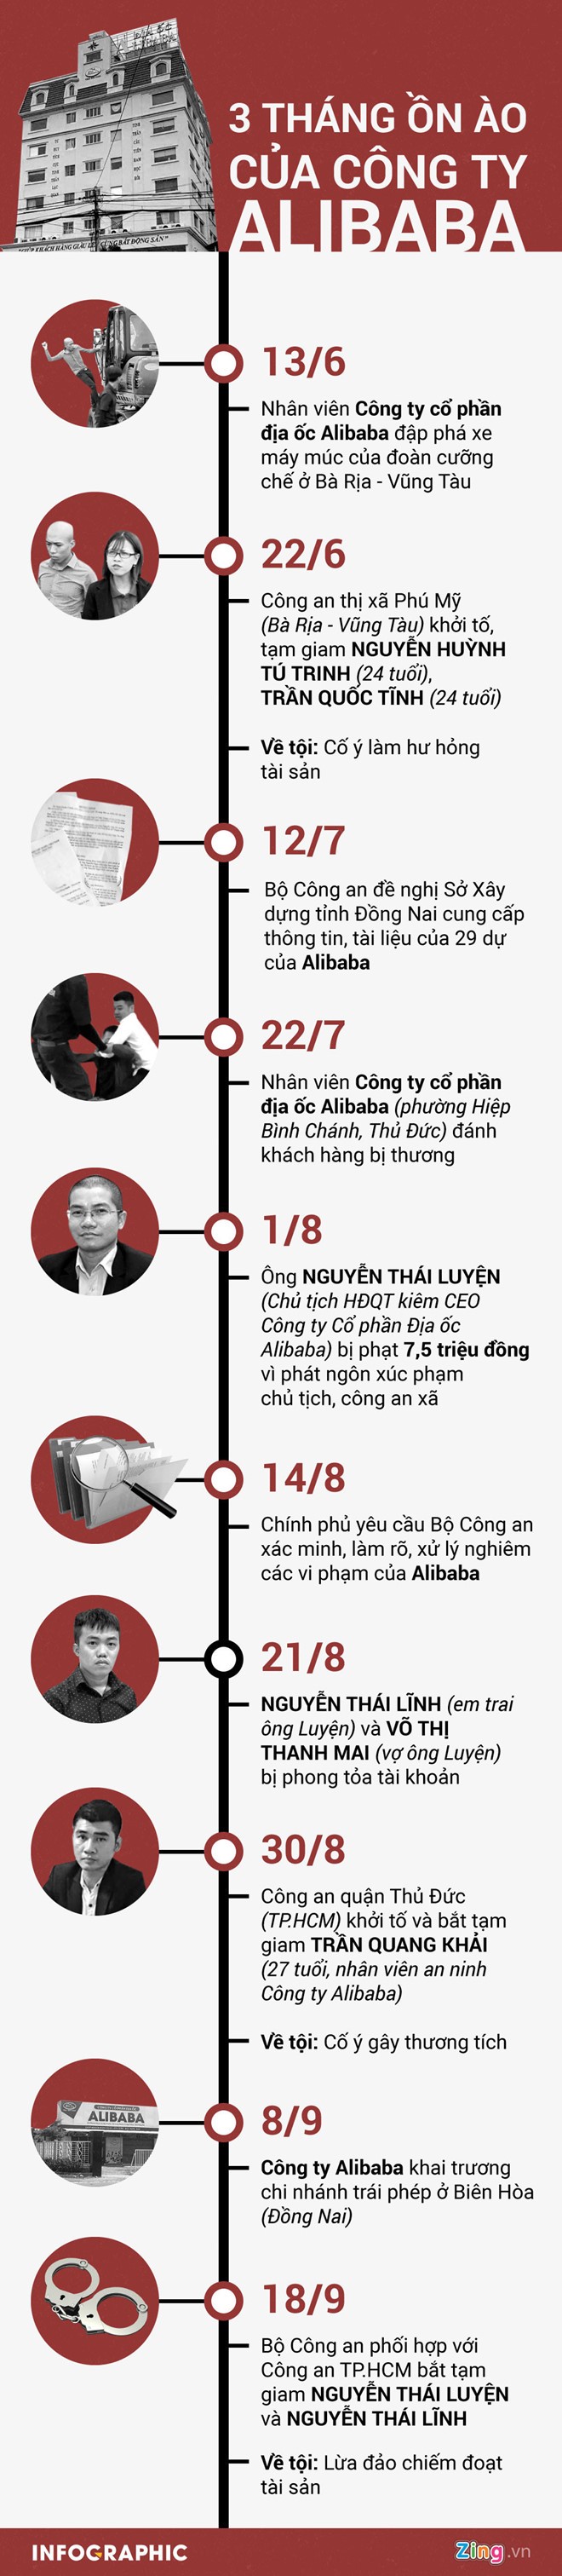 Nhan vien cua Alibaba co vo can khi CEO Nguyen Thai Luyen bi bat?-Hinh-2